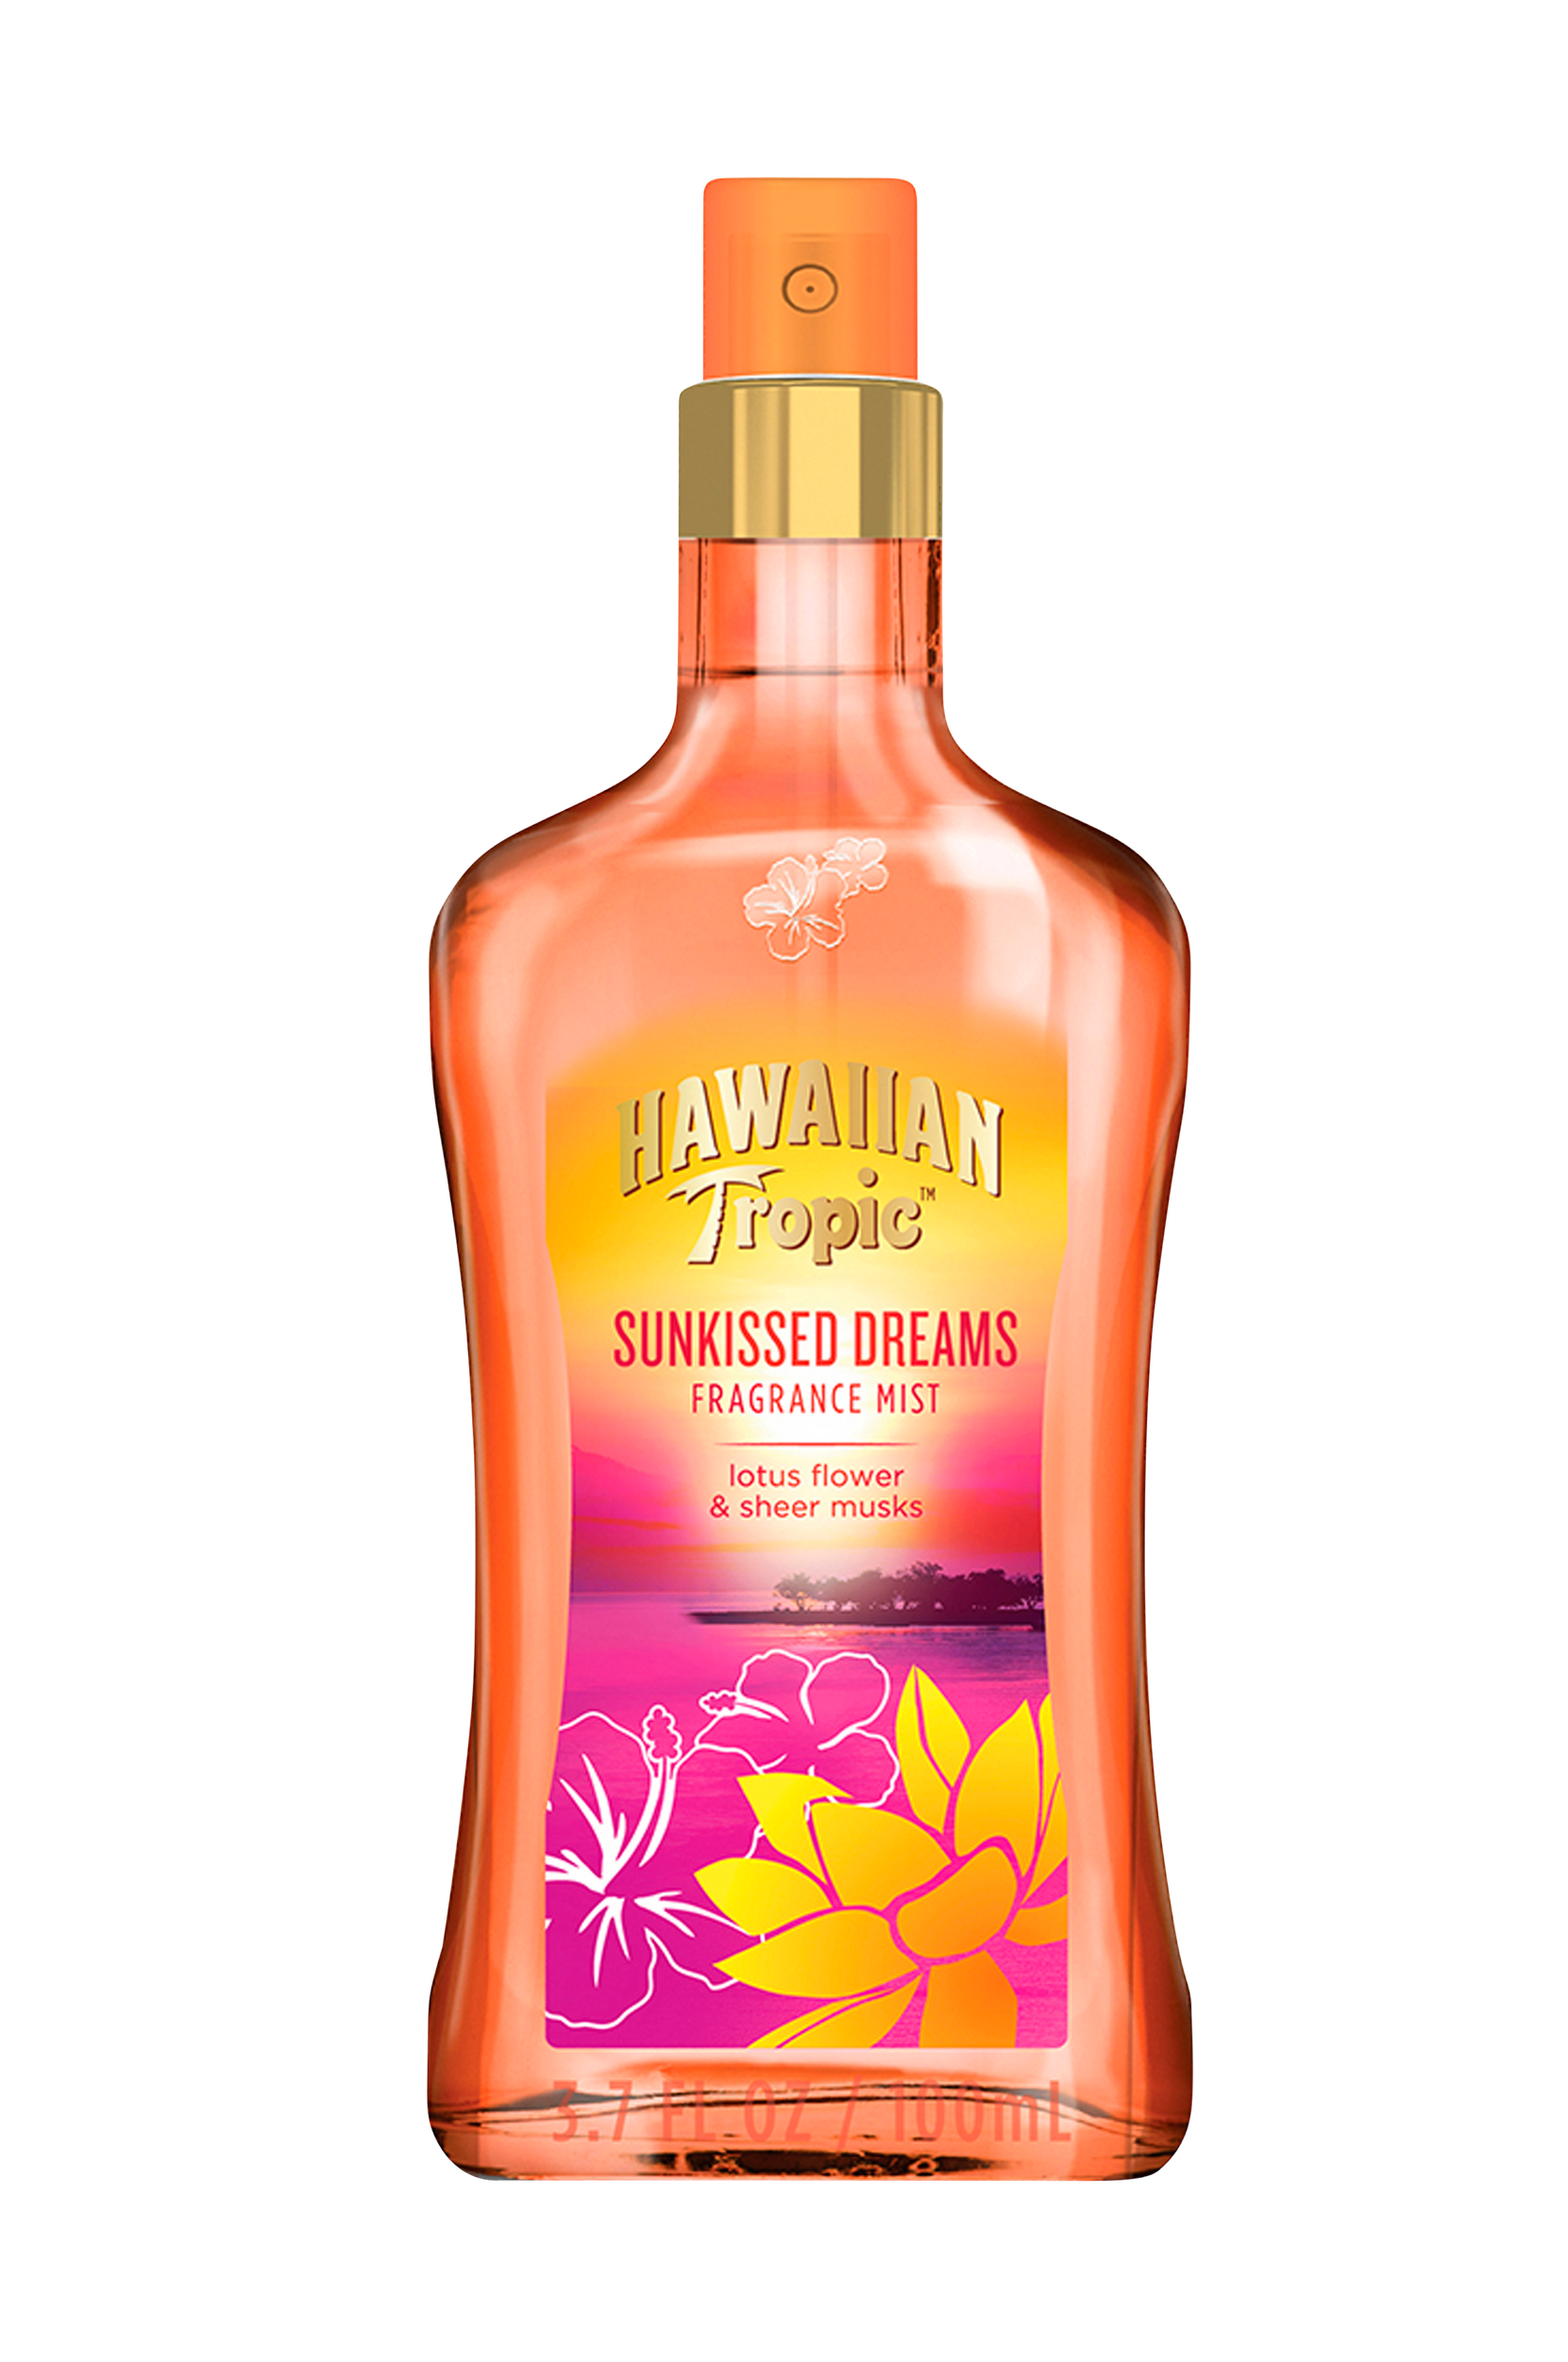 Sunkissed Dreams Body Mist 100 ml, Hawaiian Tropic